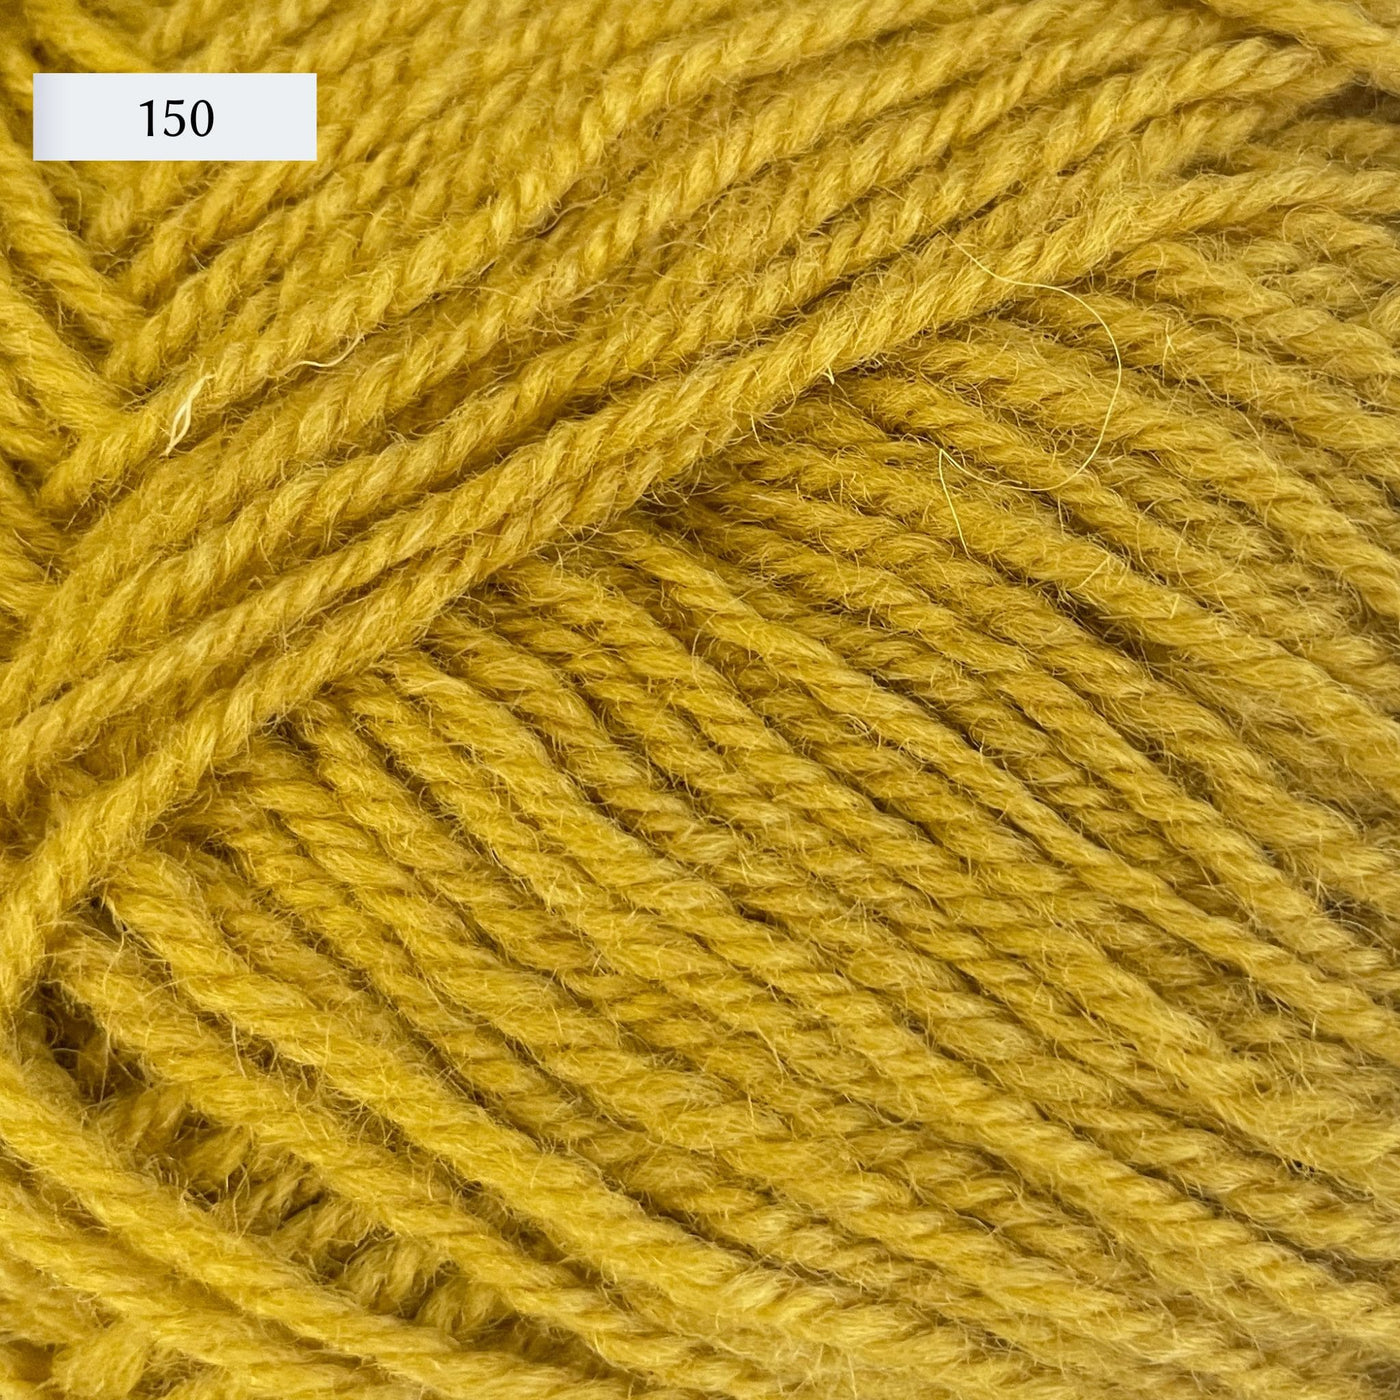 Rauma Strikkegarn, DK weight yarn, in color 150, cool yellow